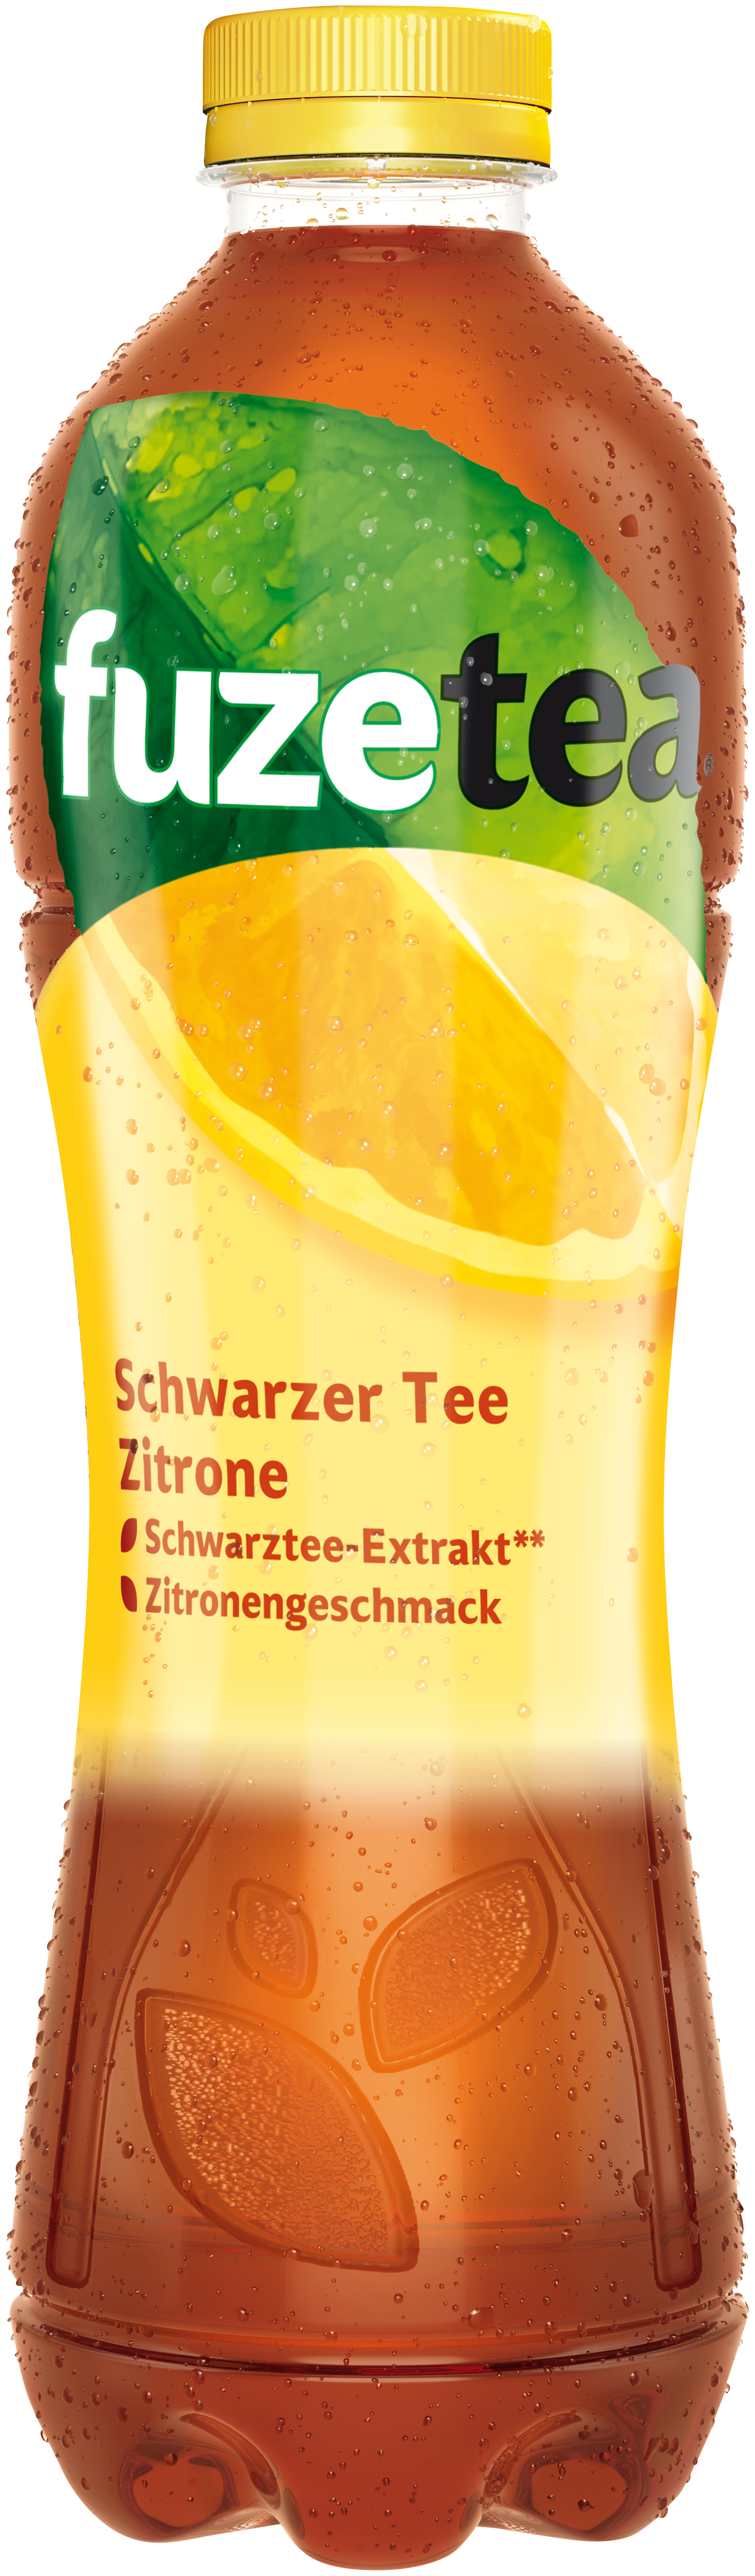 Fuze Tea Schwarzer Tee Zitrone 6x1l EW